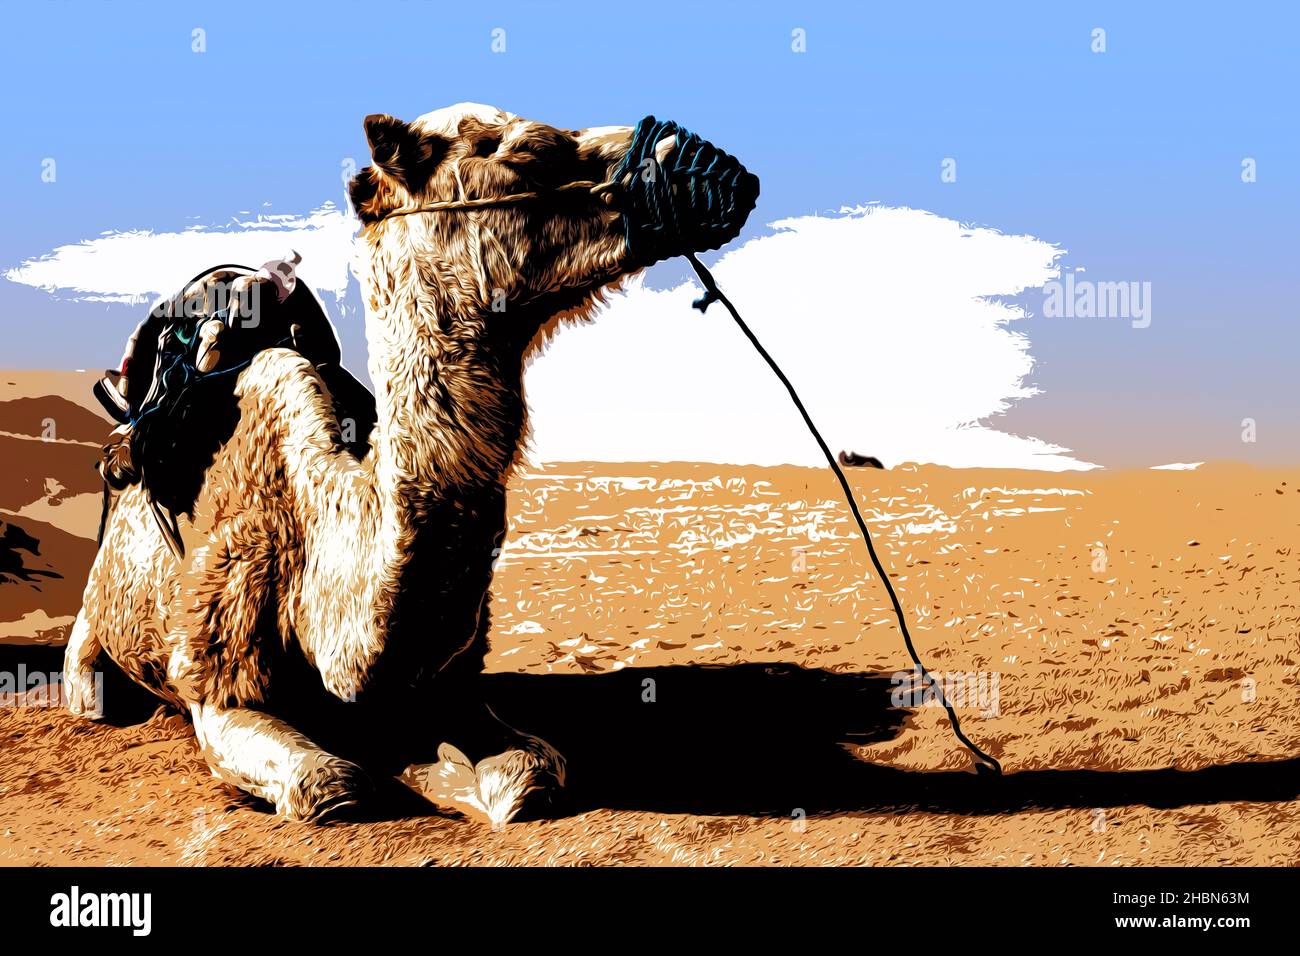 Illustration. Dromedary Camel sits on the sand in the Sahara Desert, resting. Stock Photo